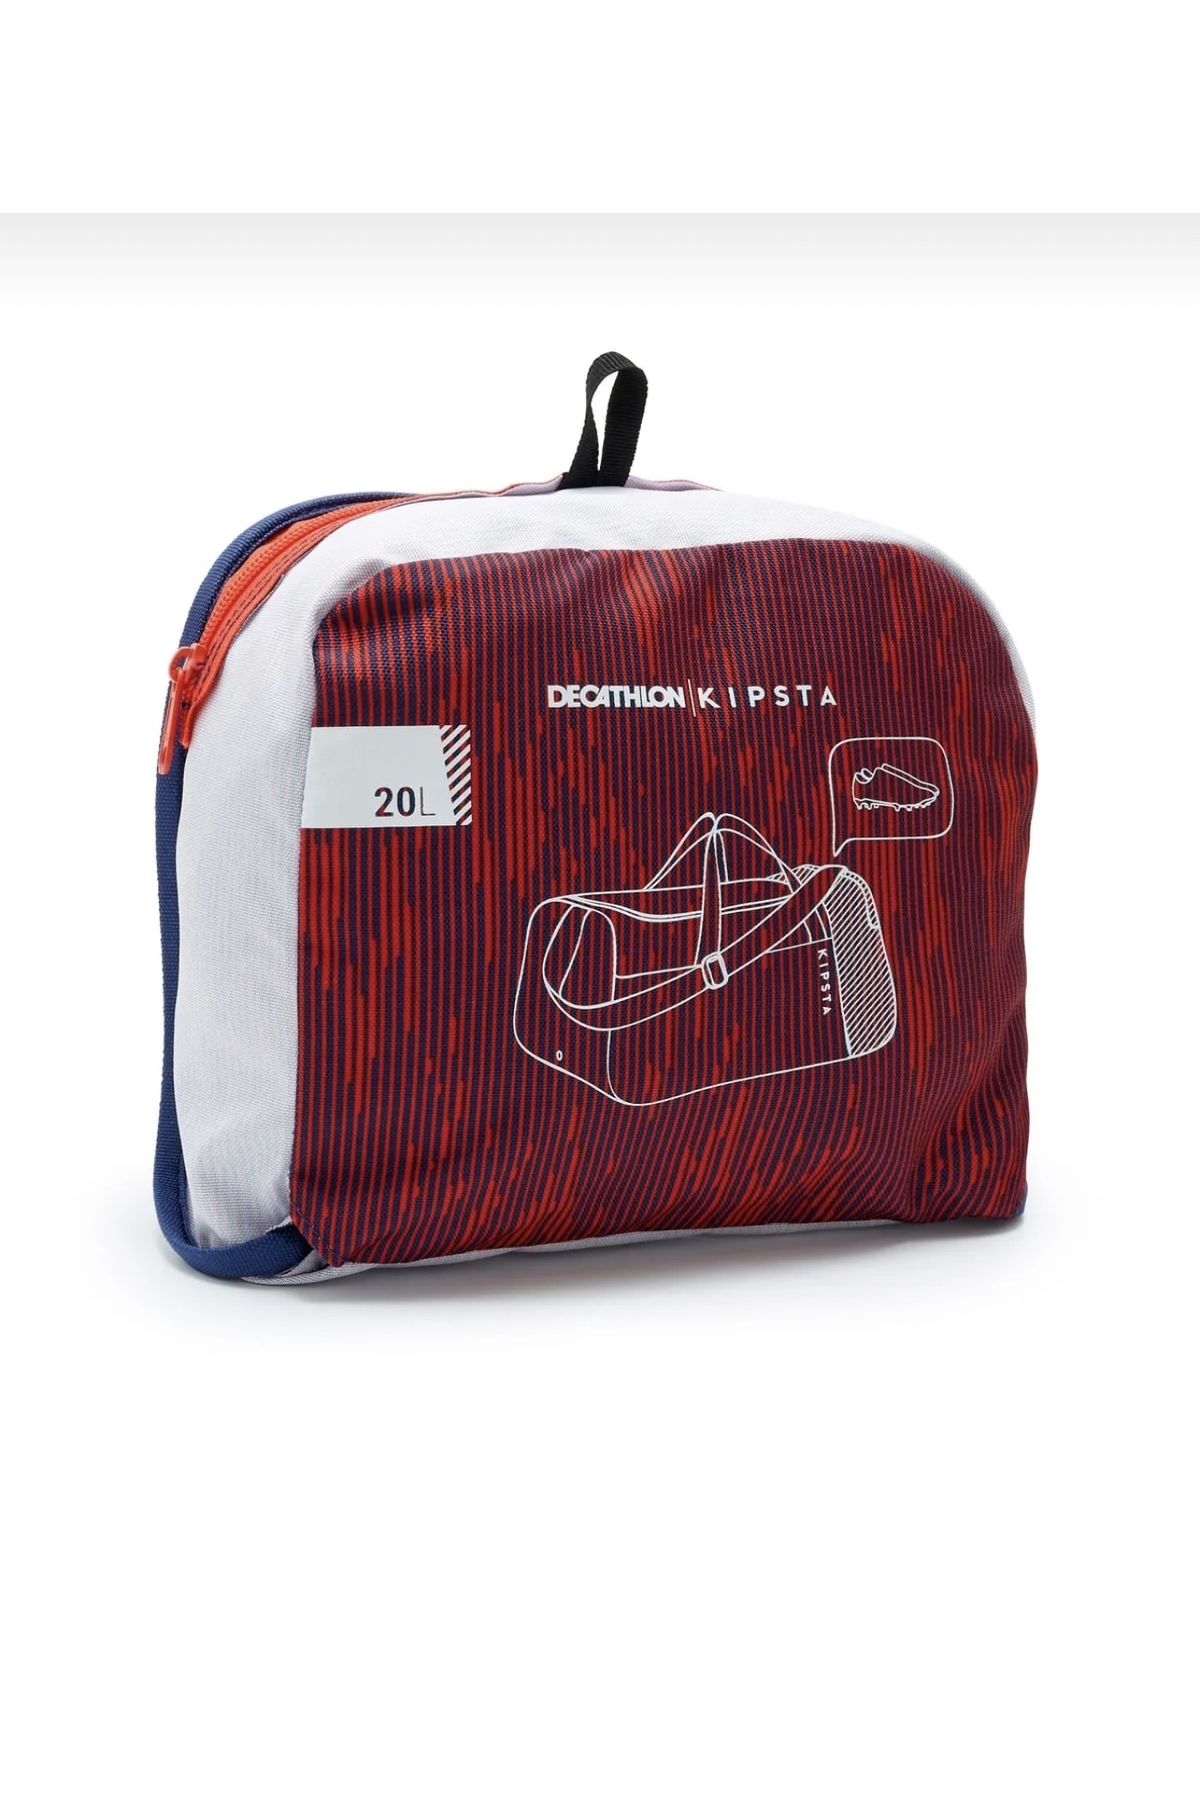 Buy Dynamics Decathlon Drawstring Backpack Bag Water-Resistant Large String  Cinch Bag Pocket & Long Handles Gym Bag Sports Backpack (Black) at Amazon.in